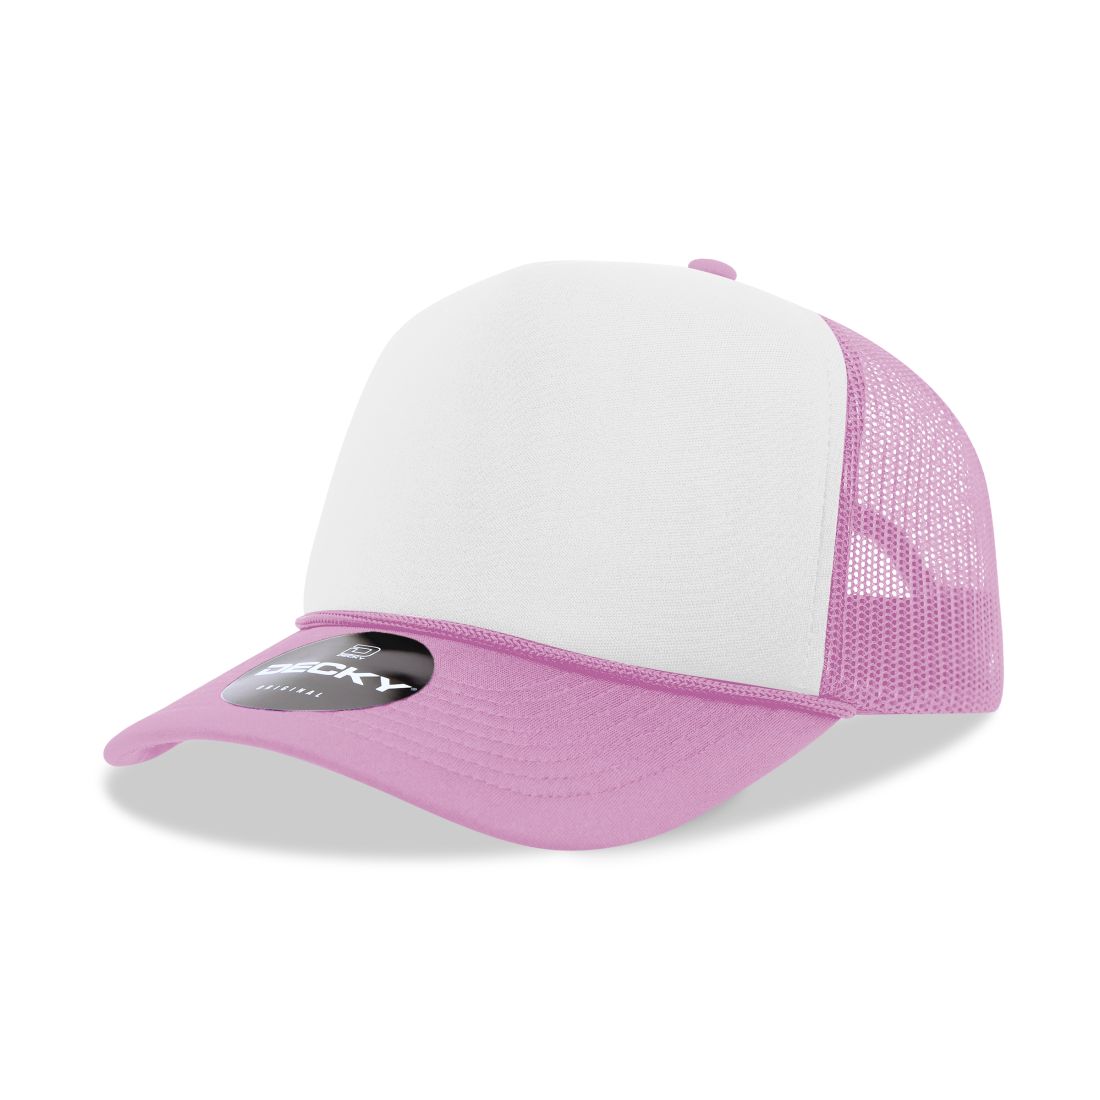 Pink/White/Pink color variant